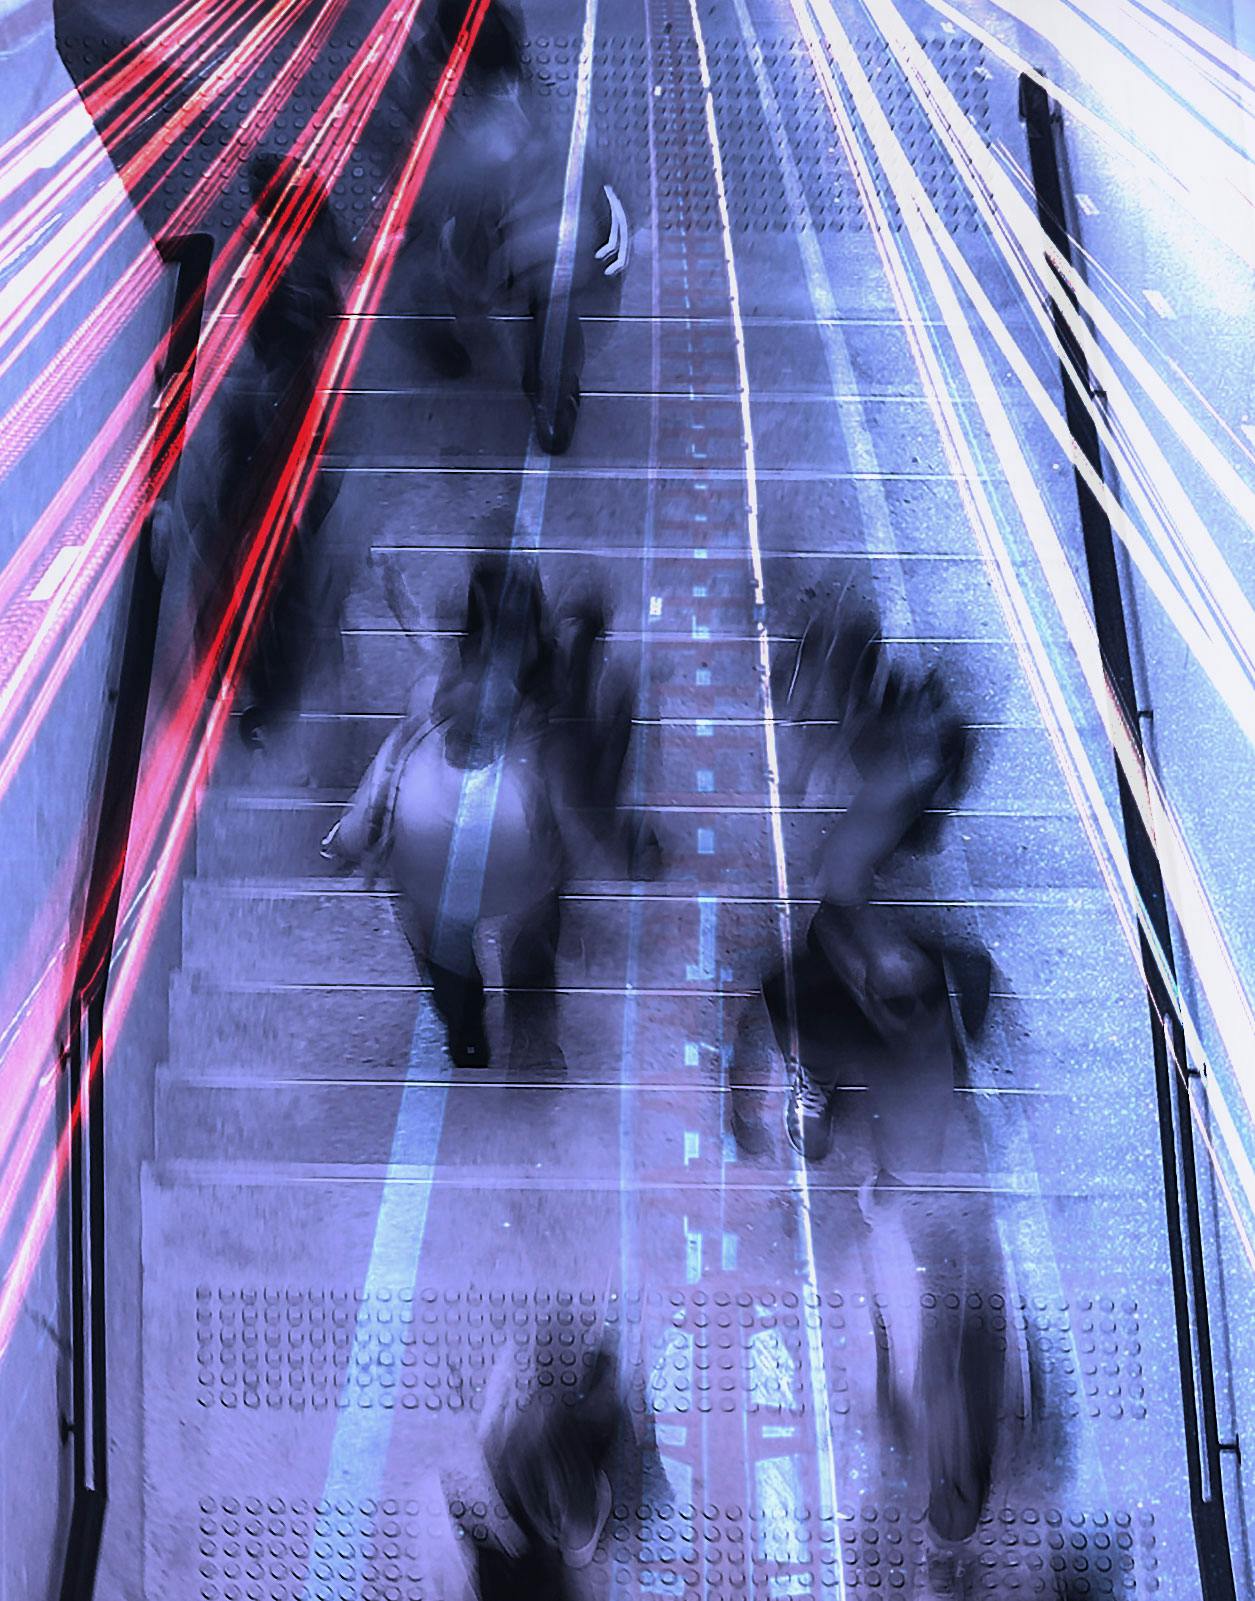 fast motion shot of people walking on a platform